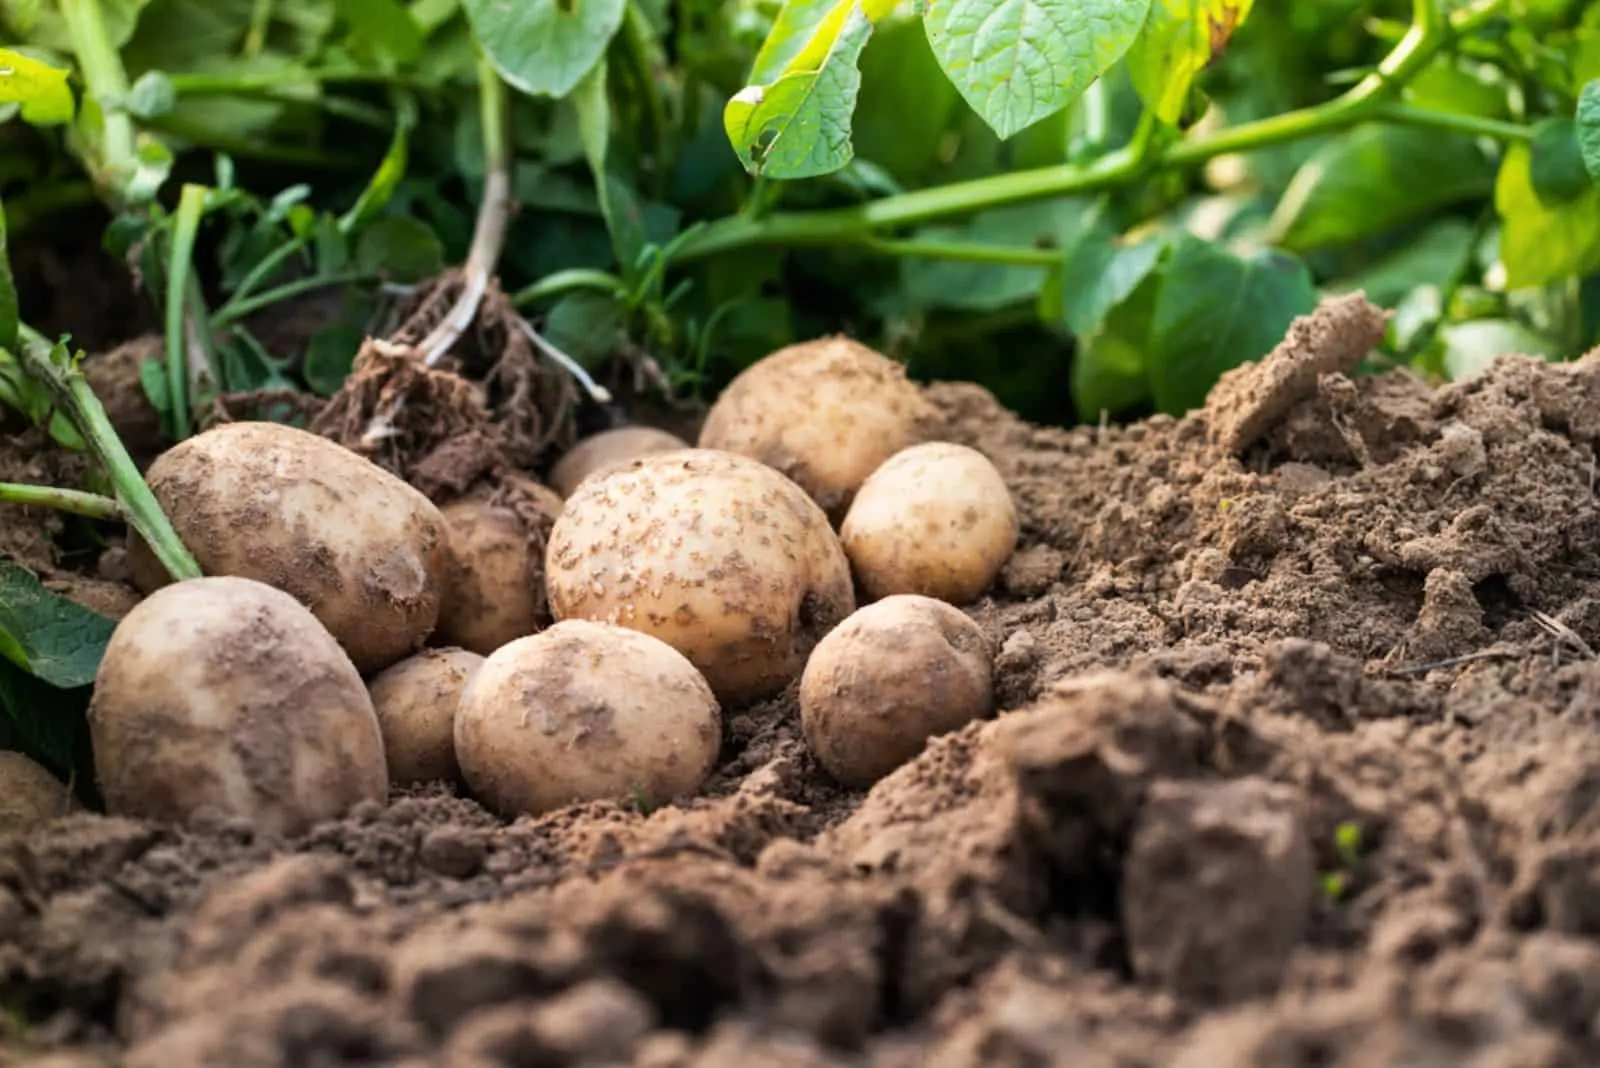 Fresh organic potatoes in the field,harvesting potatoes from soil